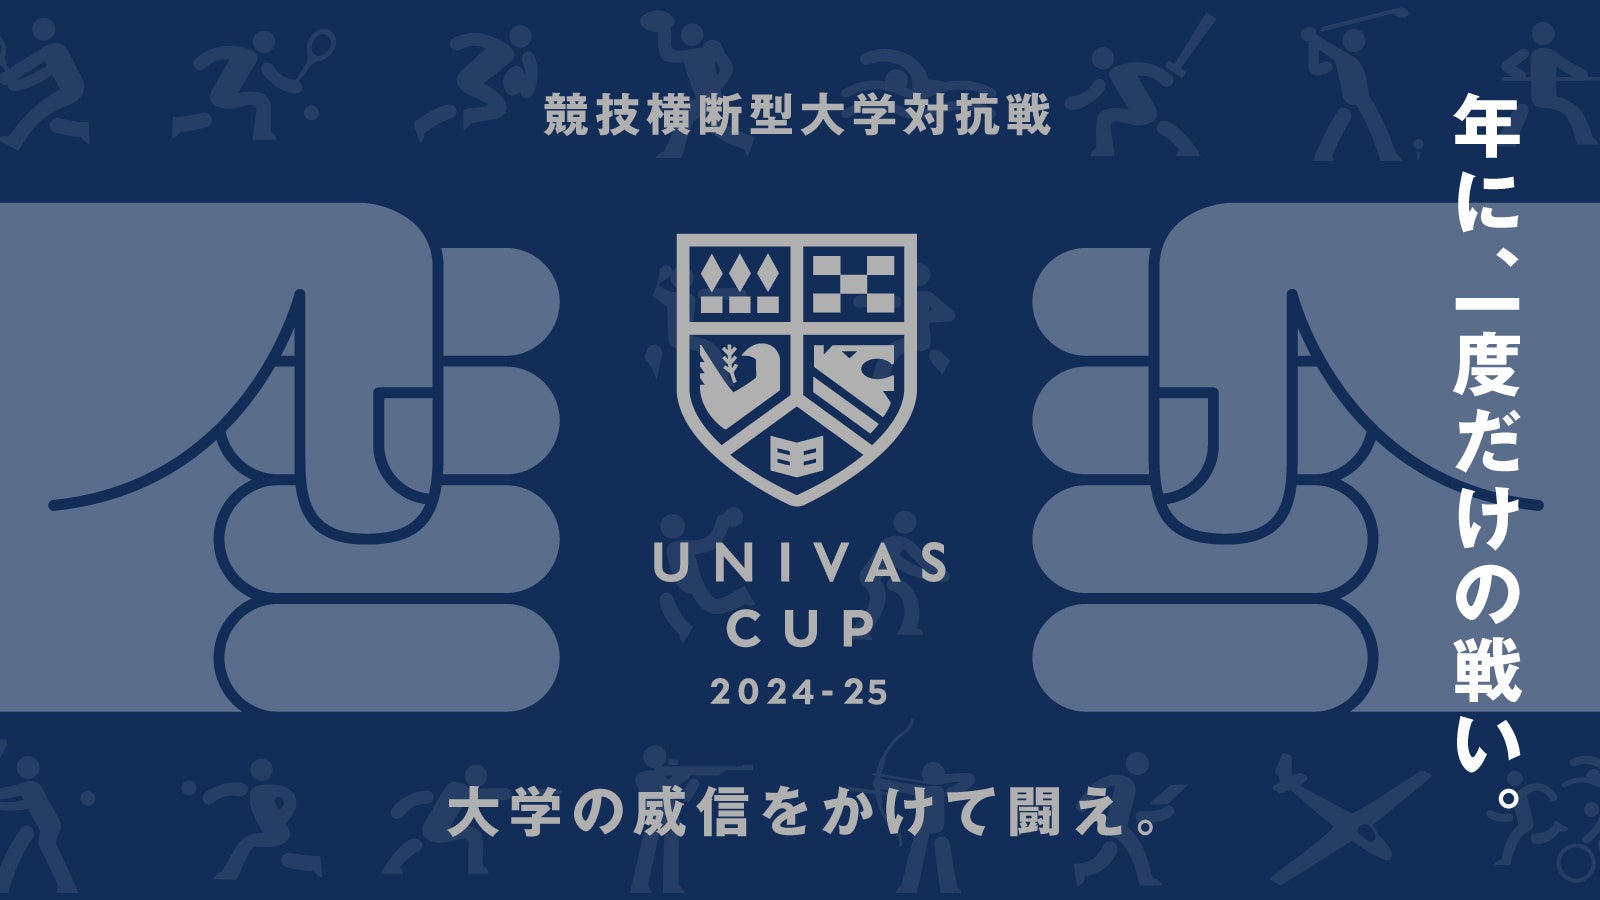 UNIVAS、大学の威信をかけて闘う競技横断型大学対抗戦「UNIVAS CUP 2024-25」の開催決定！6月10日開幕の野球からスタート‼︎